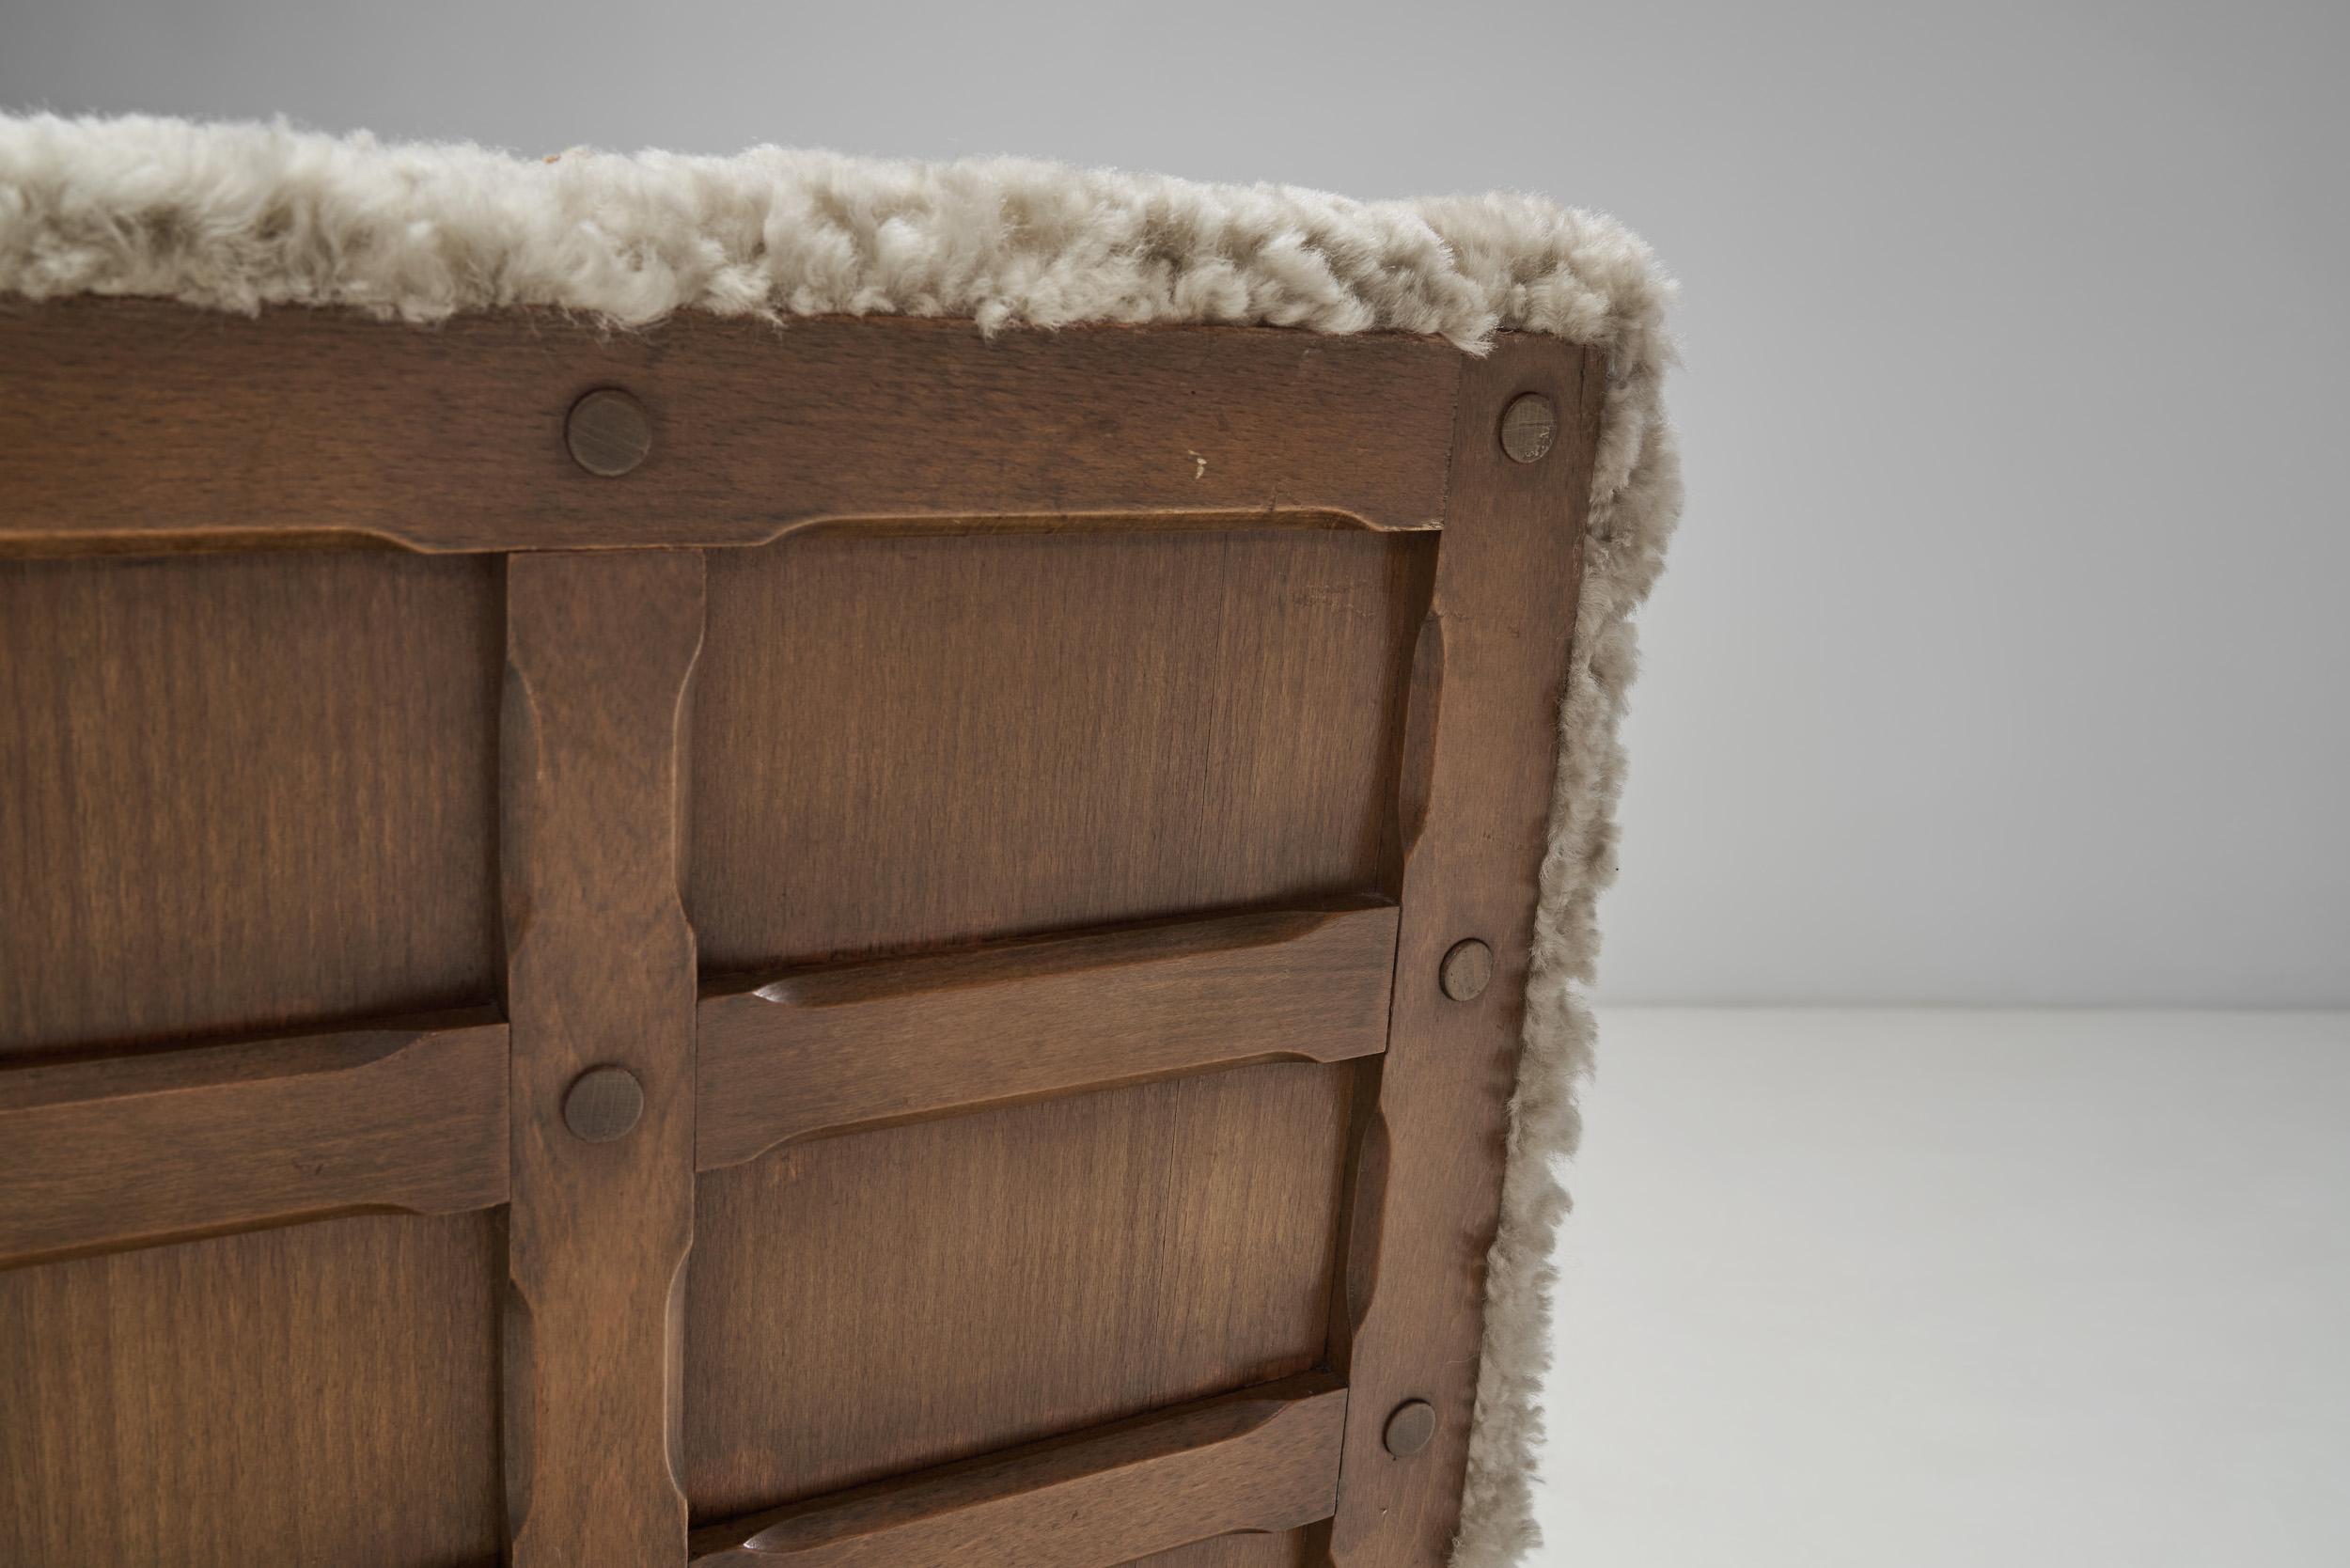 European Oak Panelled Box Chair in Sheepskin, Europe, 1940s For Sale 3